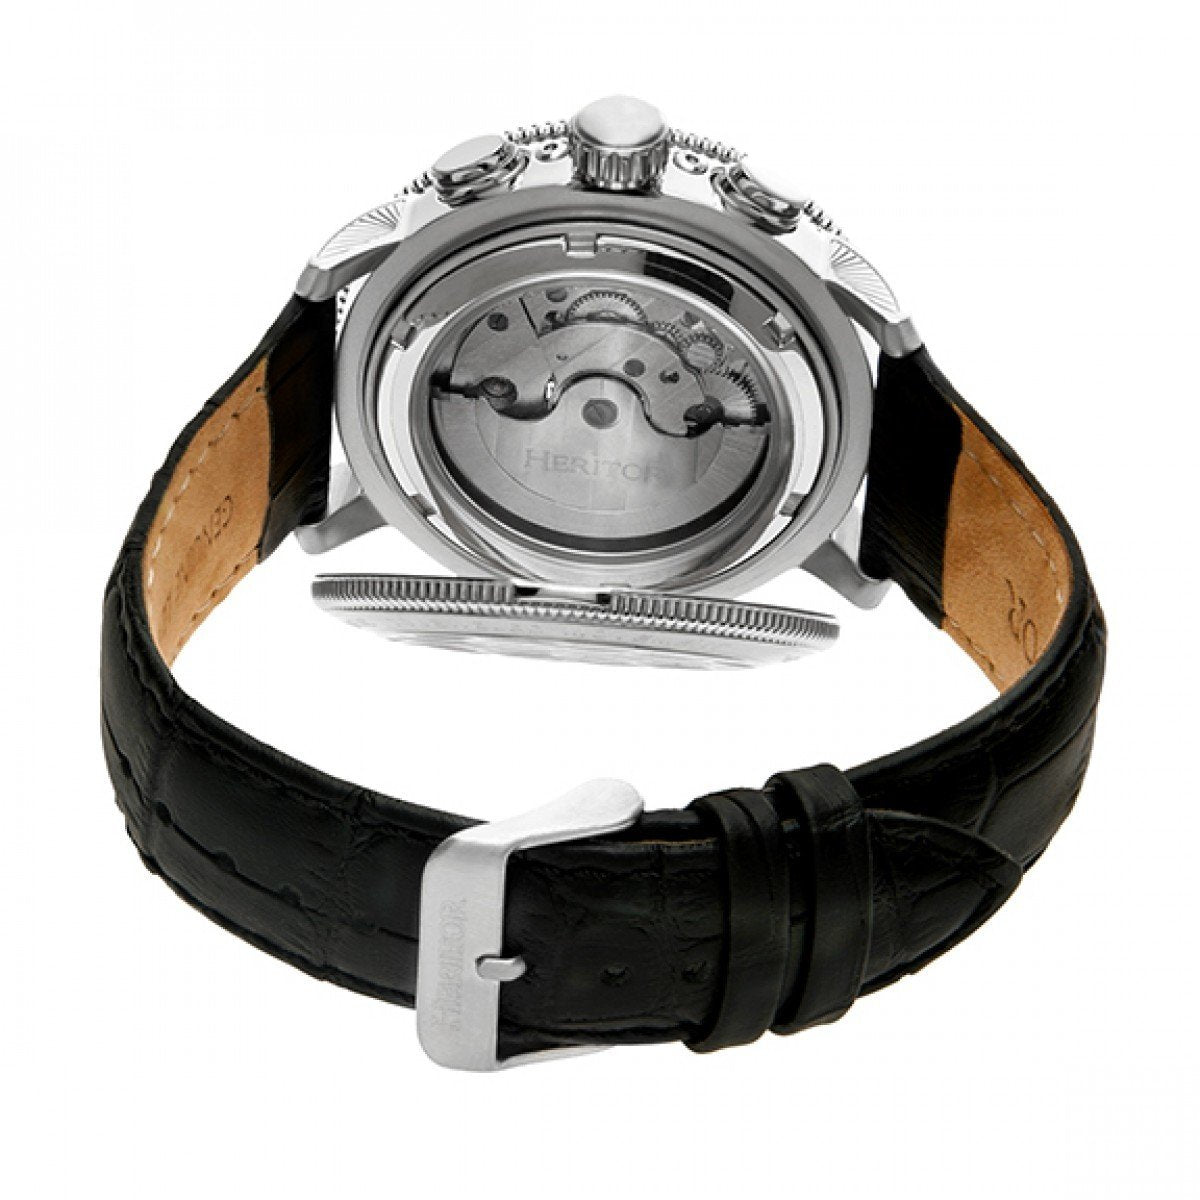 Heritor Automatic Aura Men's Semi-Skeleton Leather-Band Watch - Silver/Black - HERHR3501